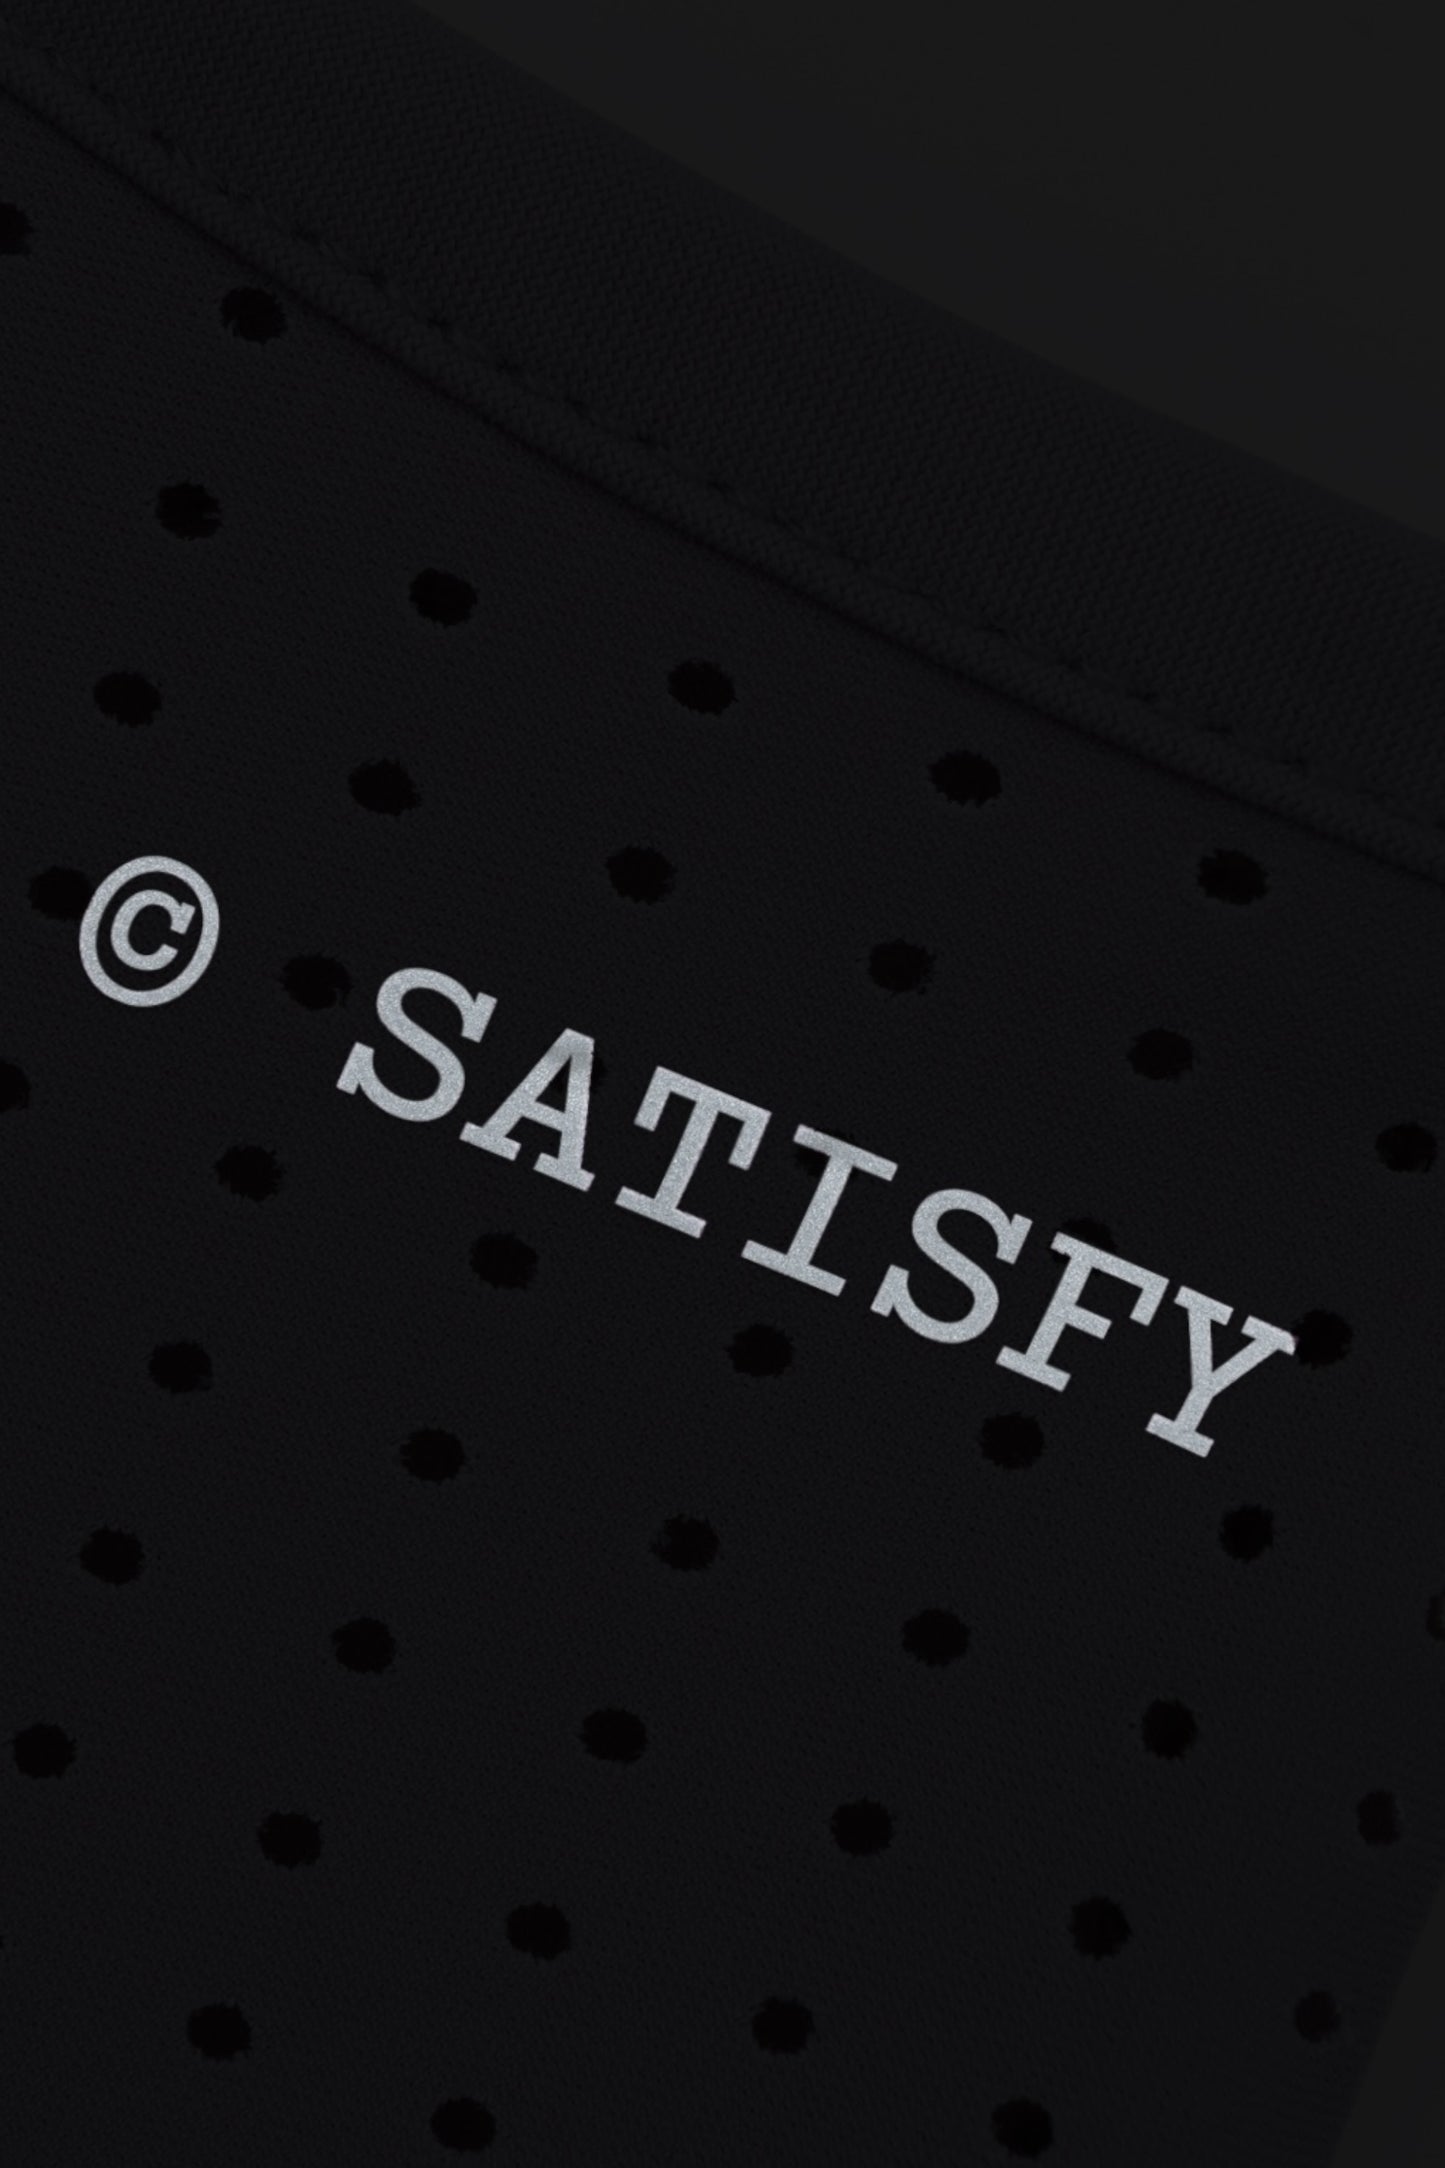 Satisfy - Space-O Singlet (Lavender Gray)